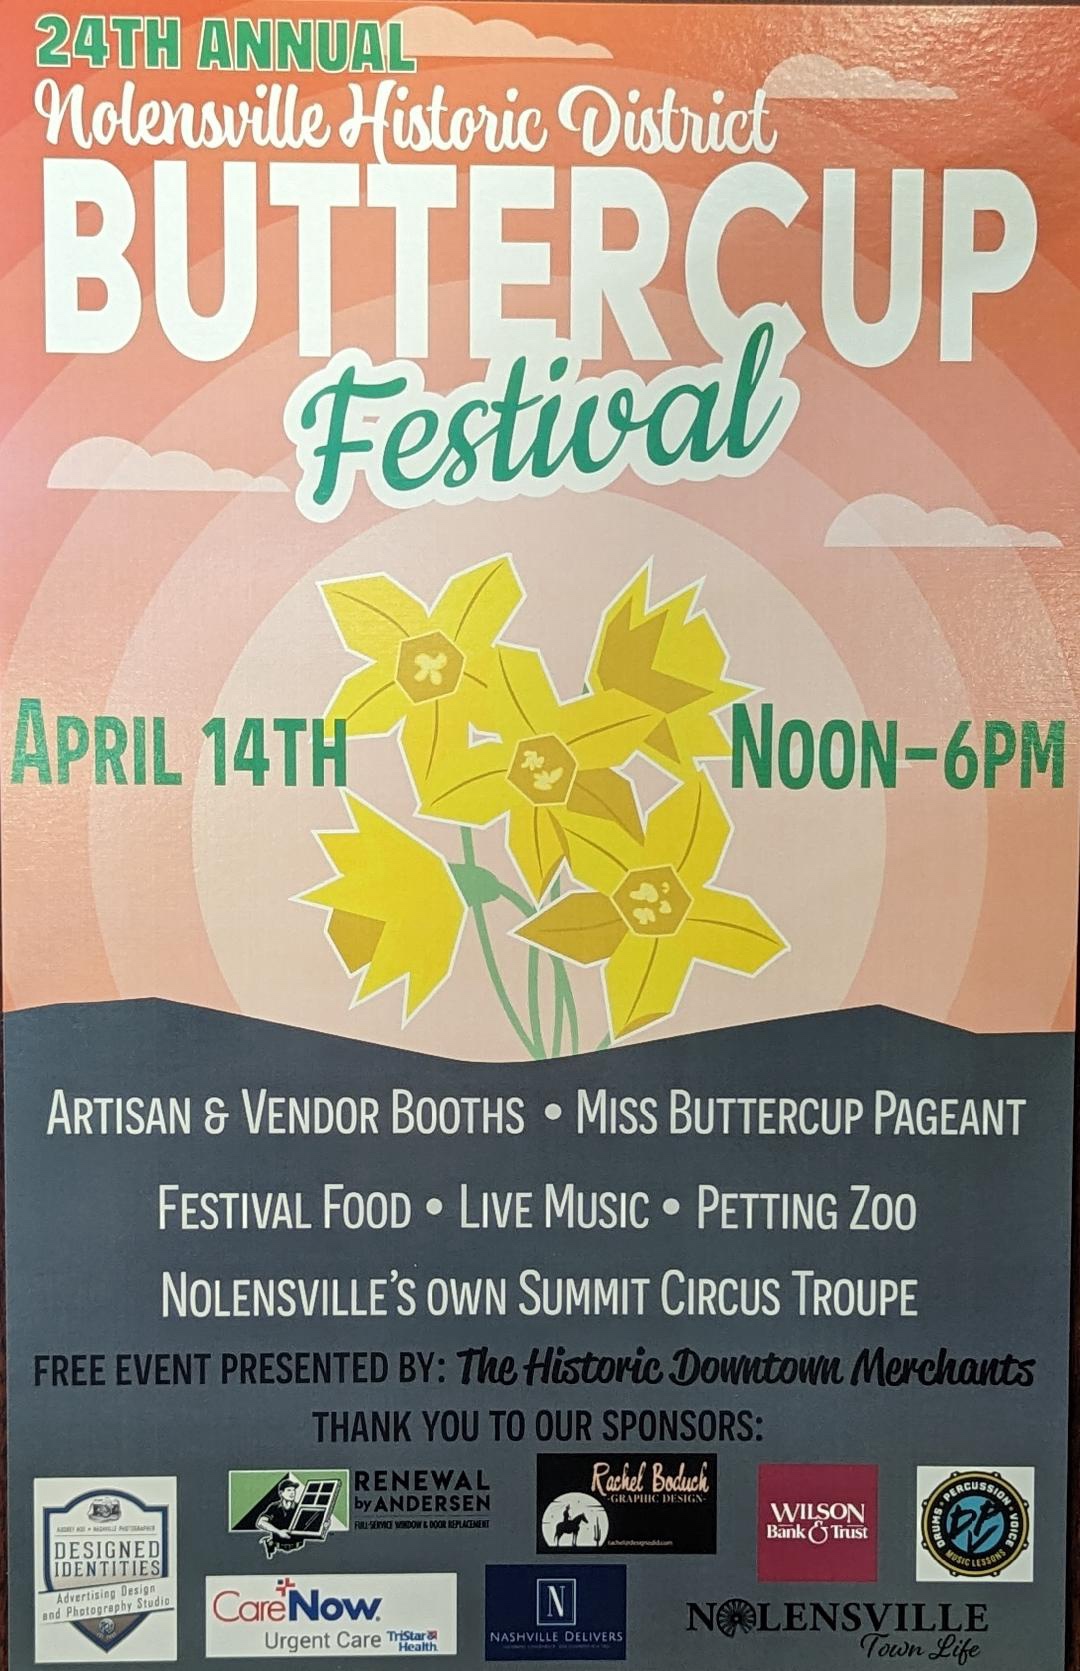 The Buttercup Festival in Nolensville, TN.